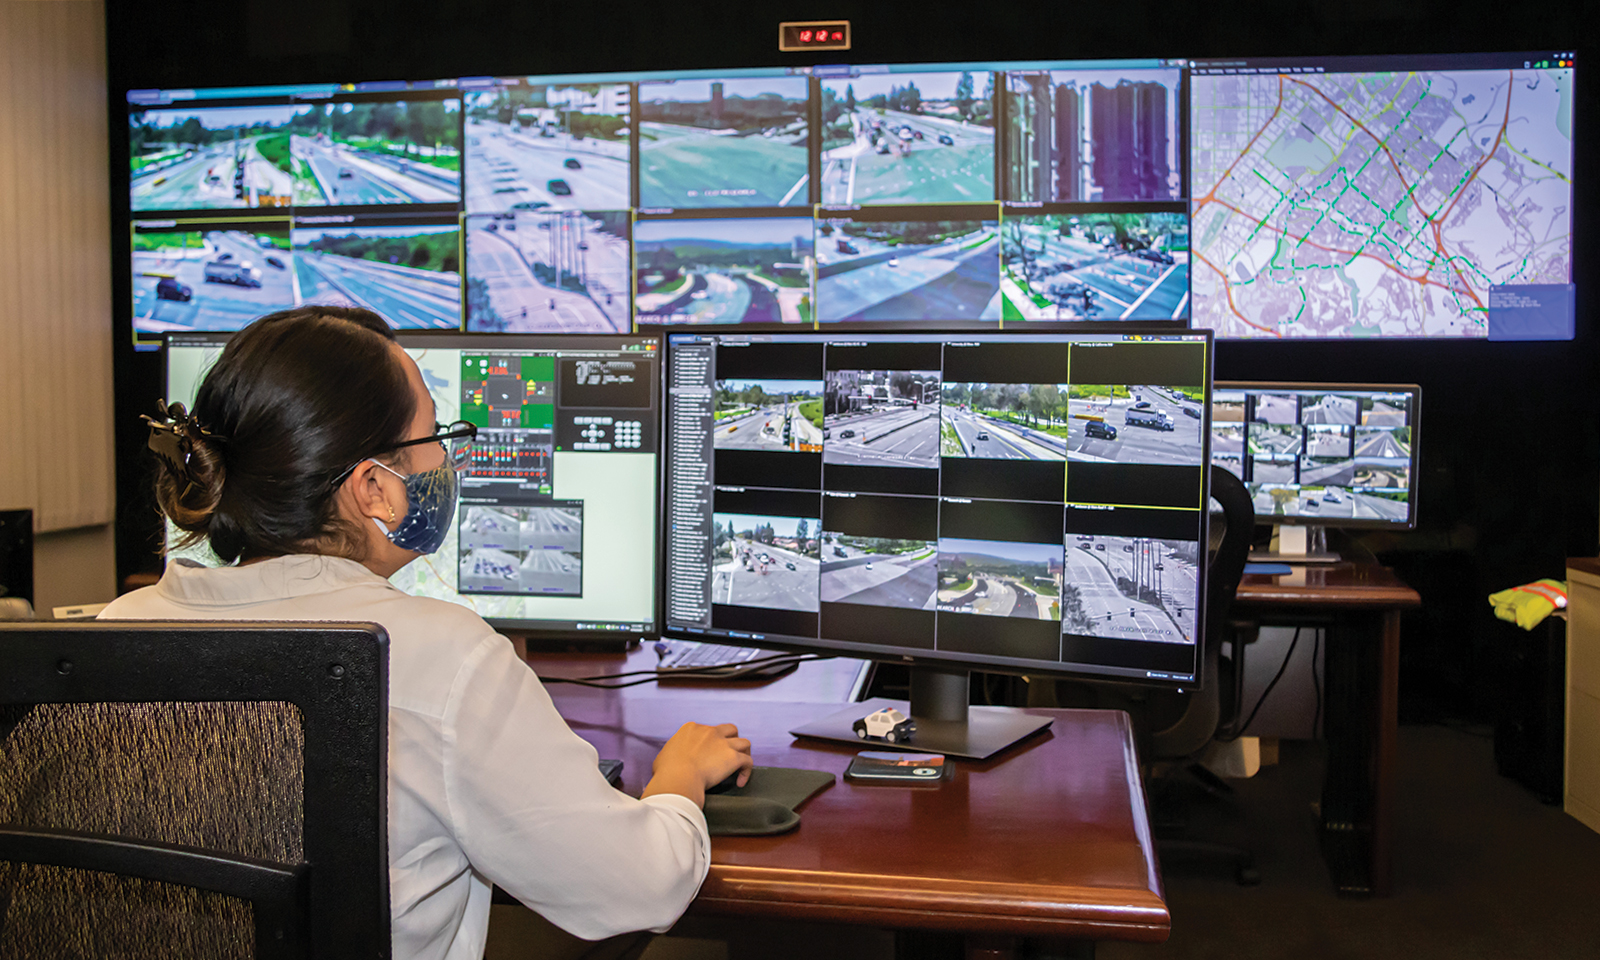 New technologies keep traffic flowing on Irvine streets